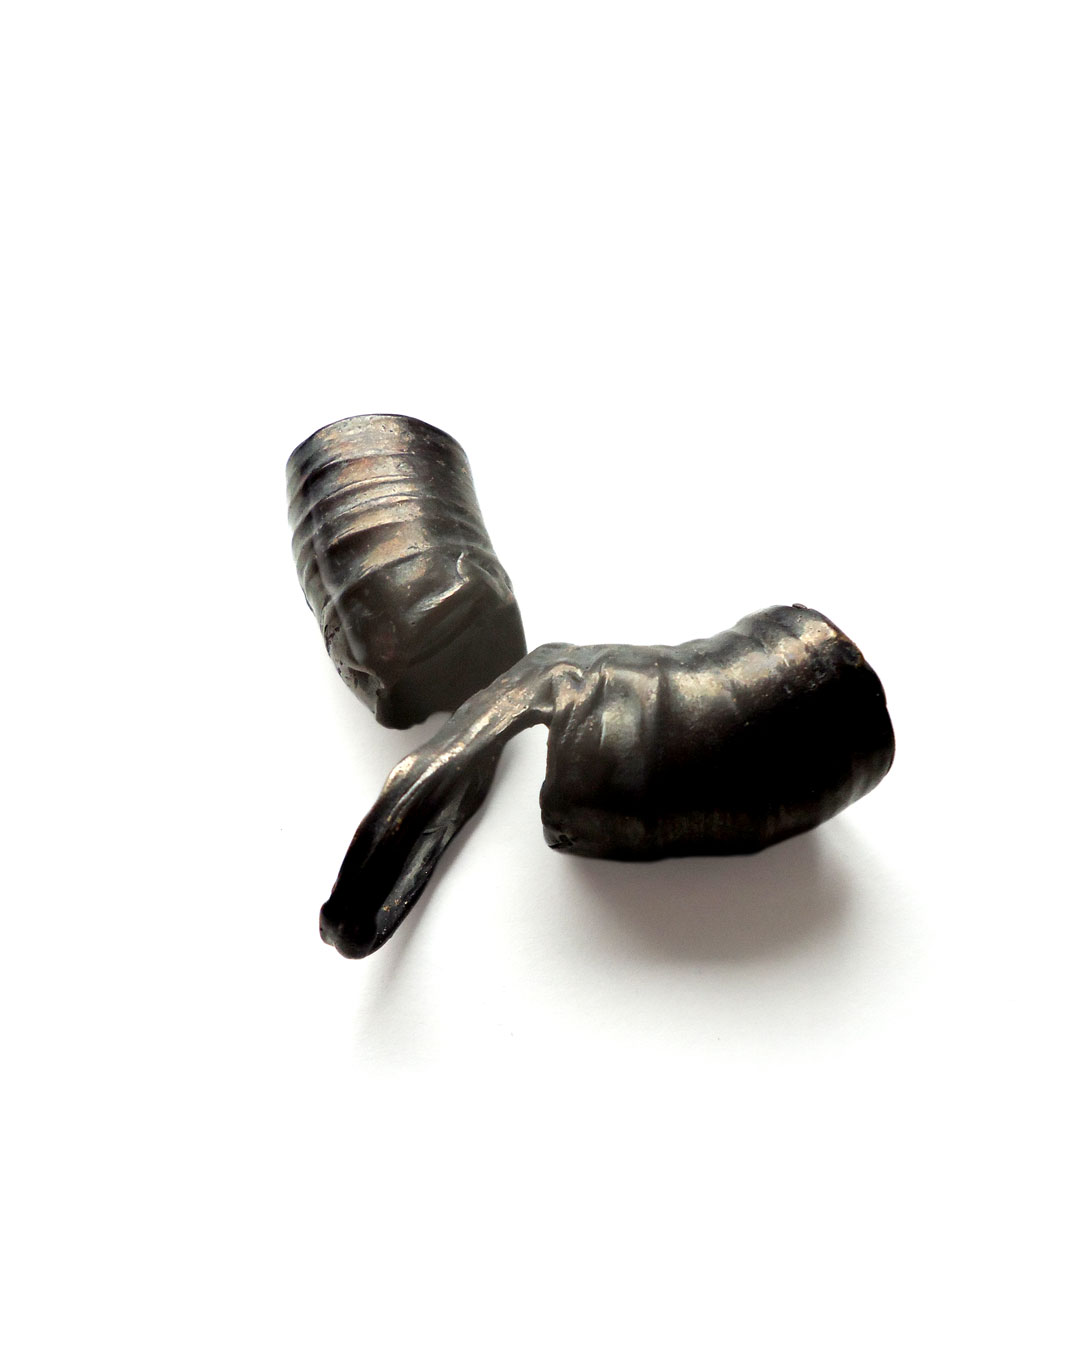 Dana Seachuga, Rebellious-Spring-Ring 5, 2015, ring; bronze, iron, 70 x 50 x 20 mm, €395